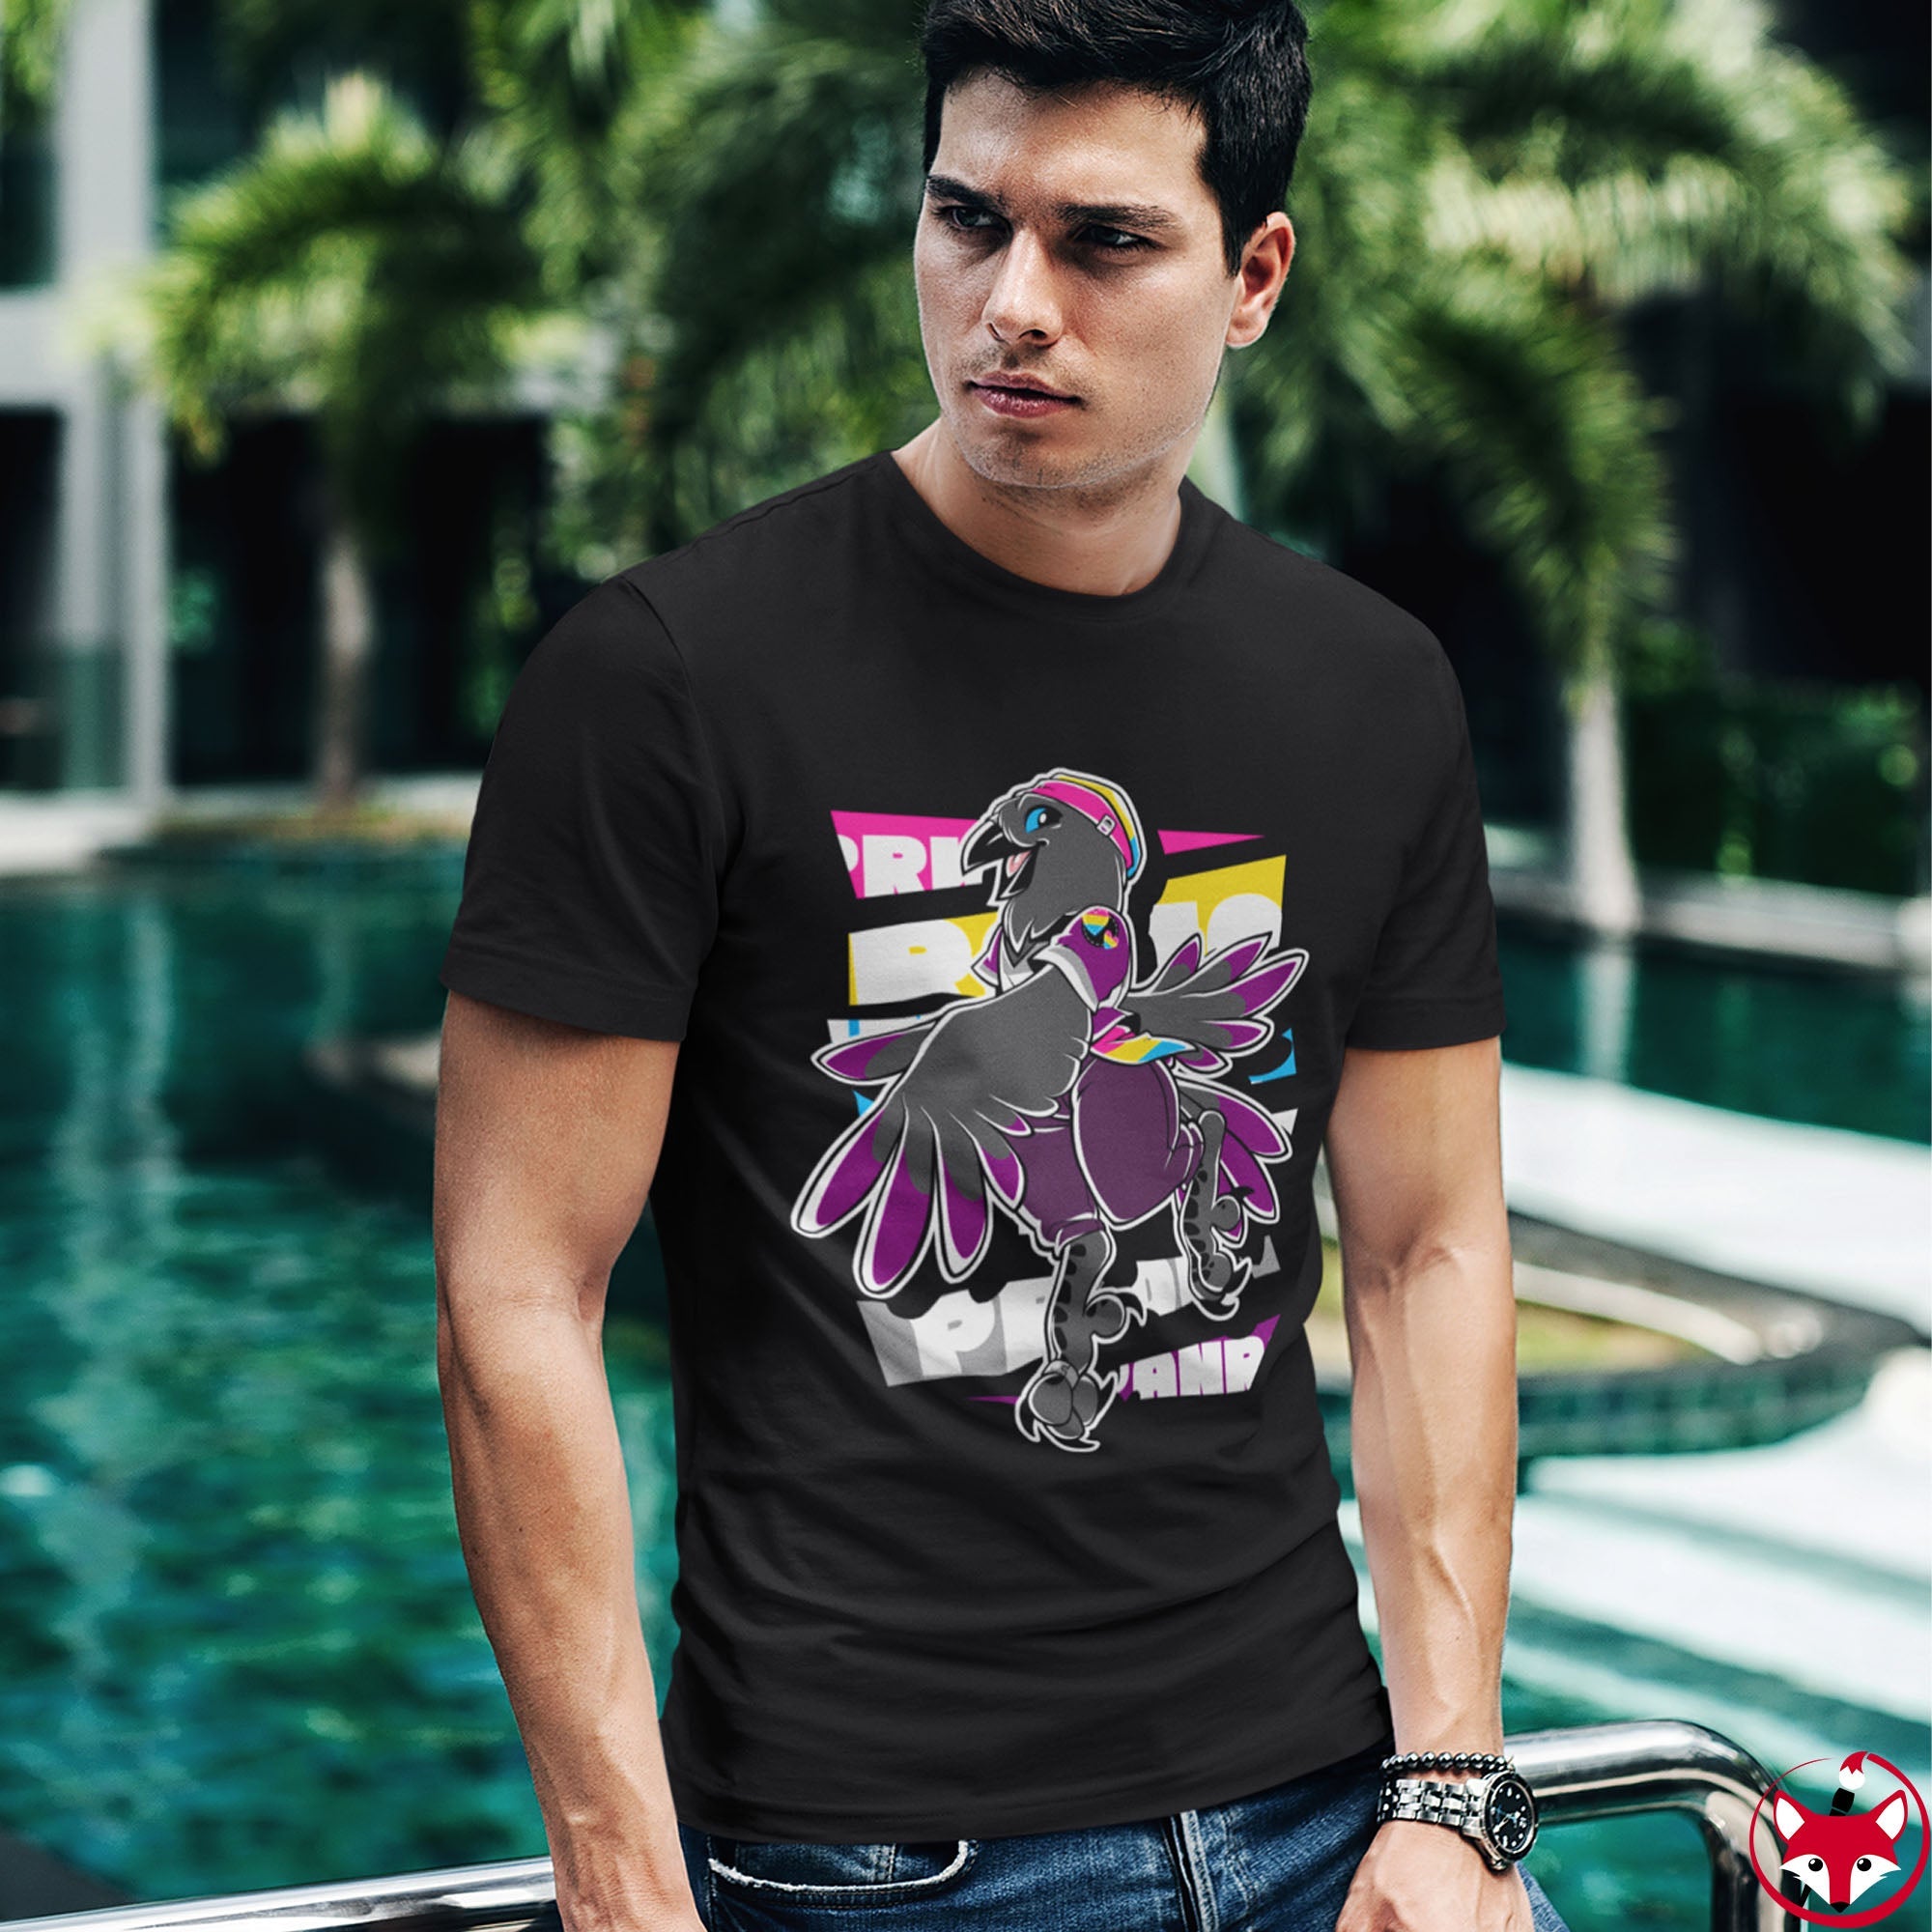 Panromantic Pride Munin Raven - T-Shirt T-Shirt Artworktee 